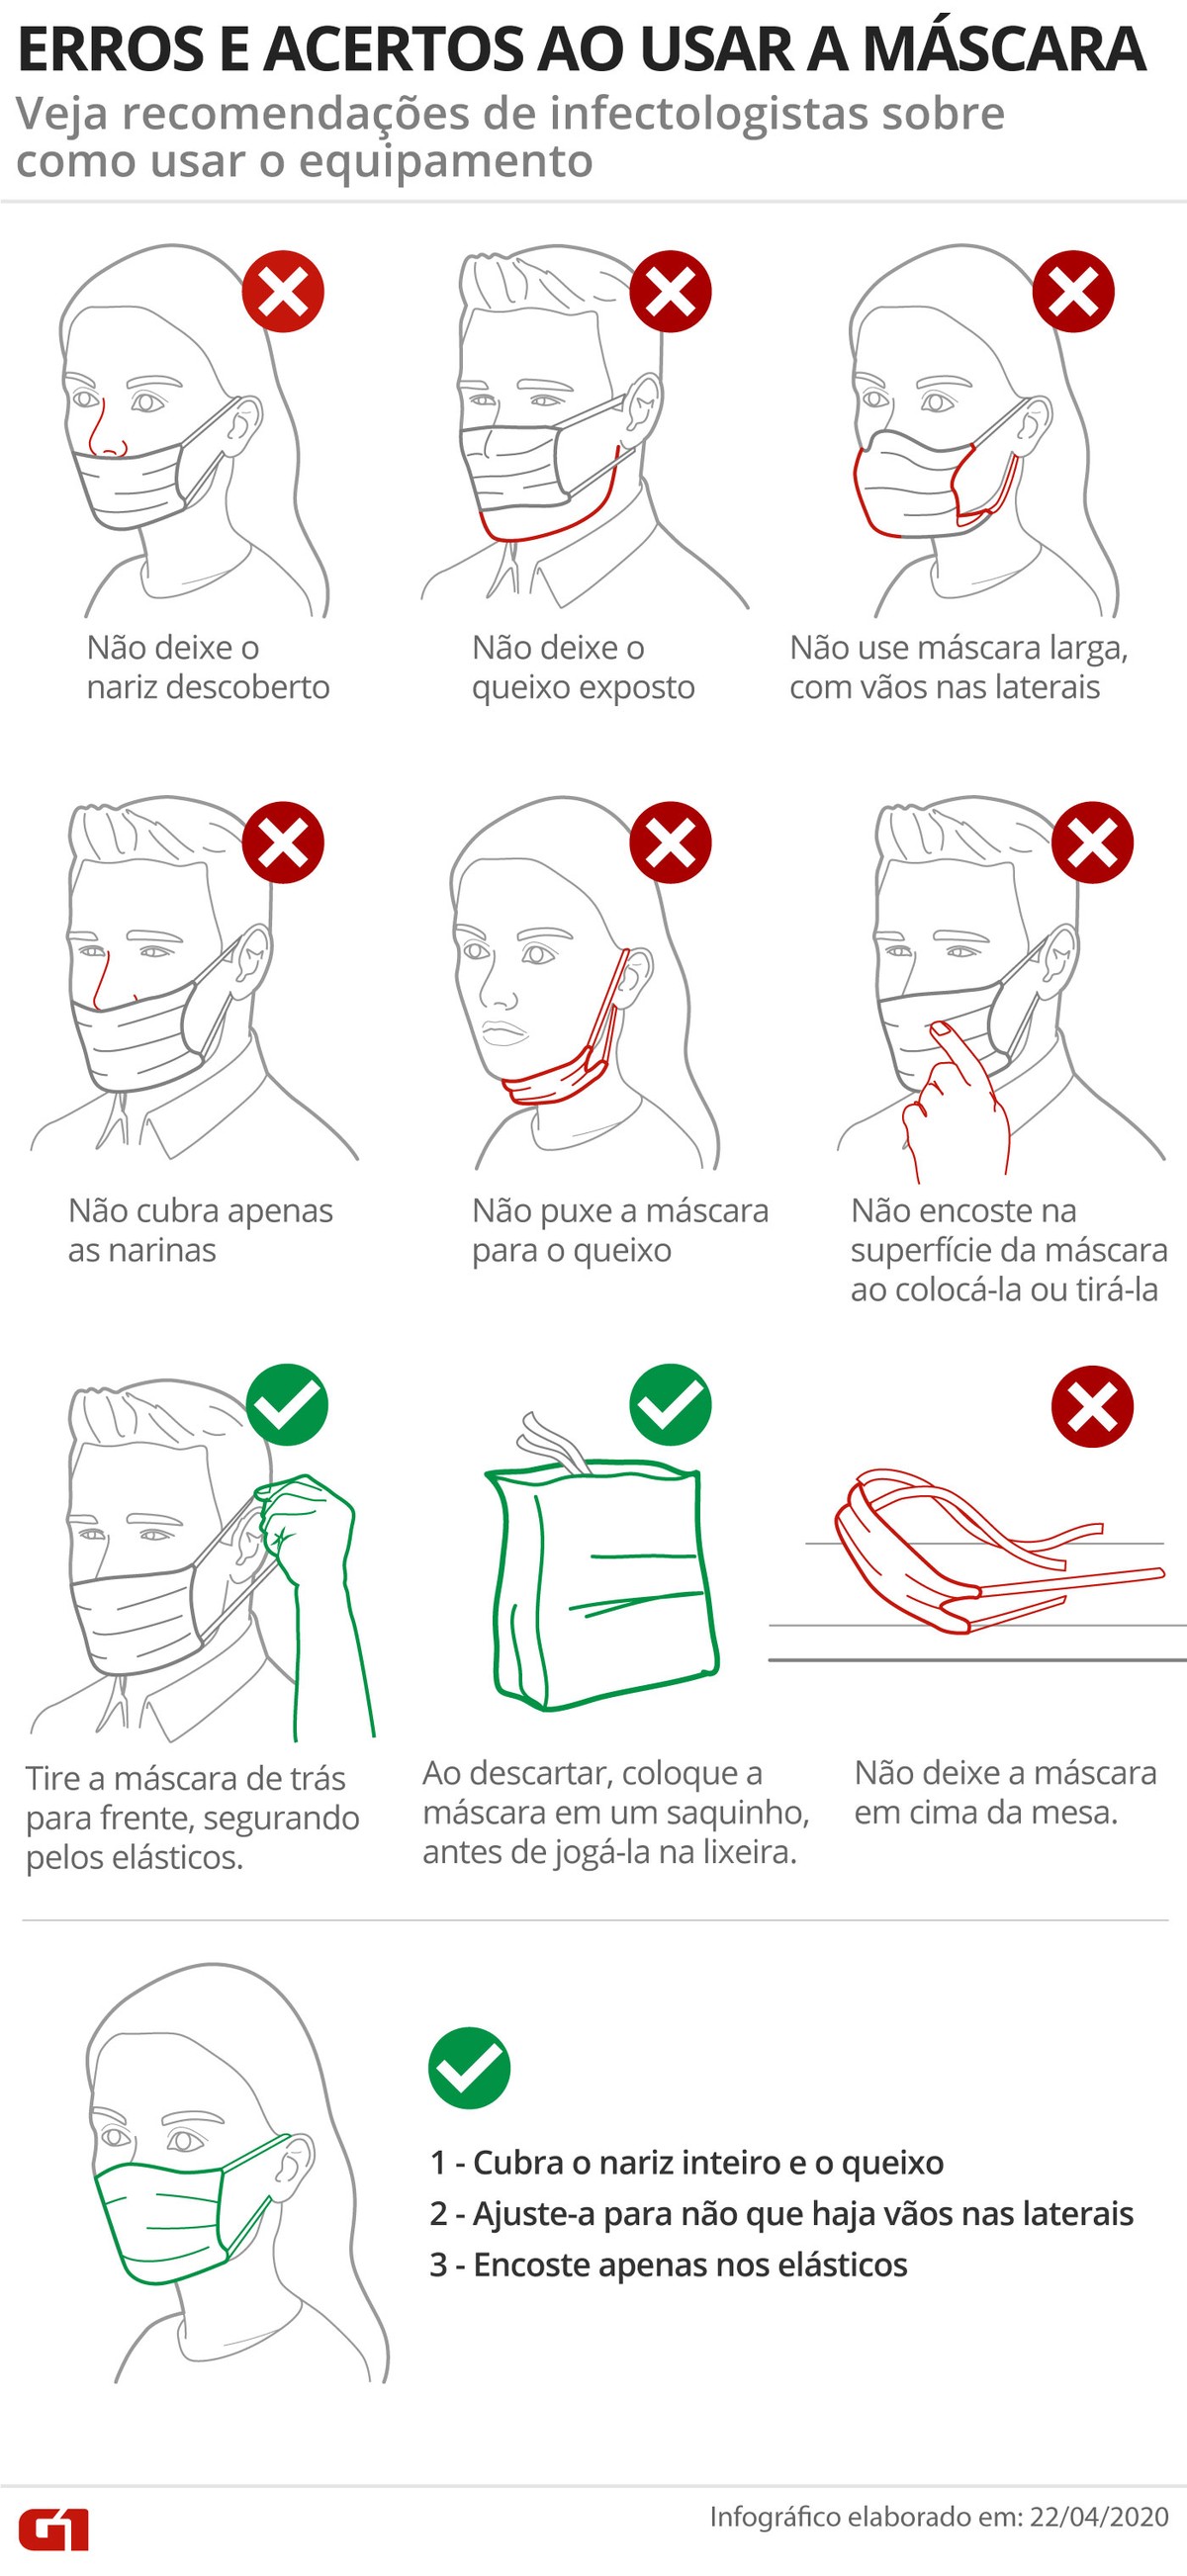 Os erros mais comuns no uso de máscaras para se proteger do coronavírus – e como usar corretamente